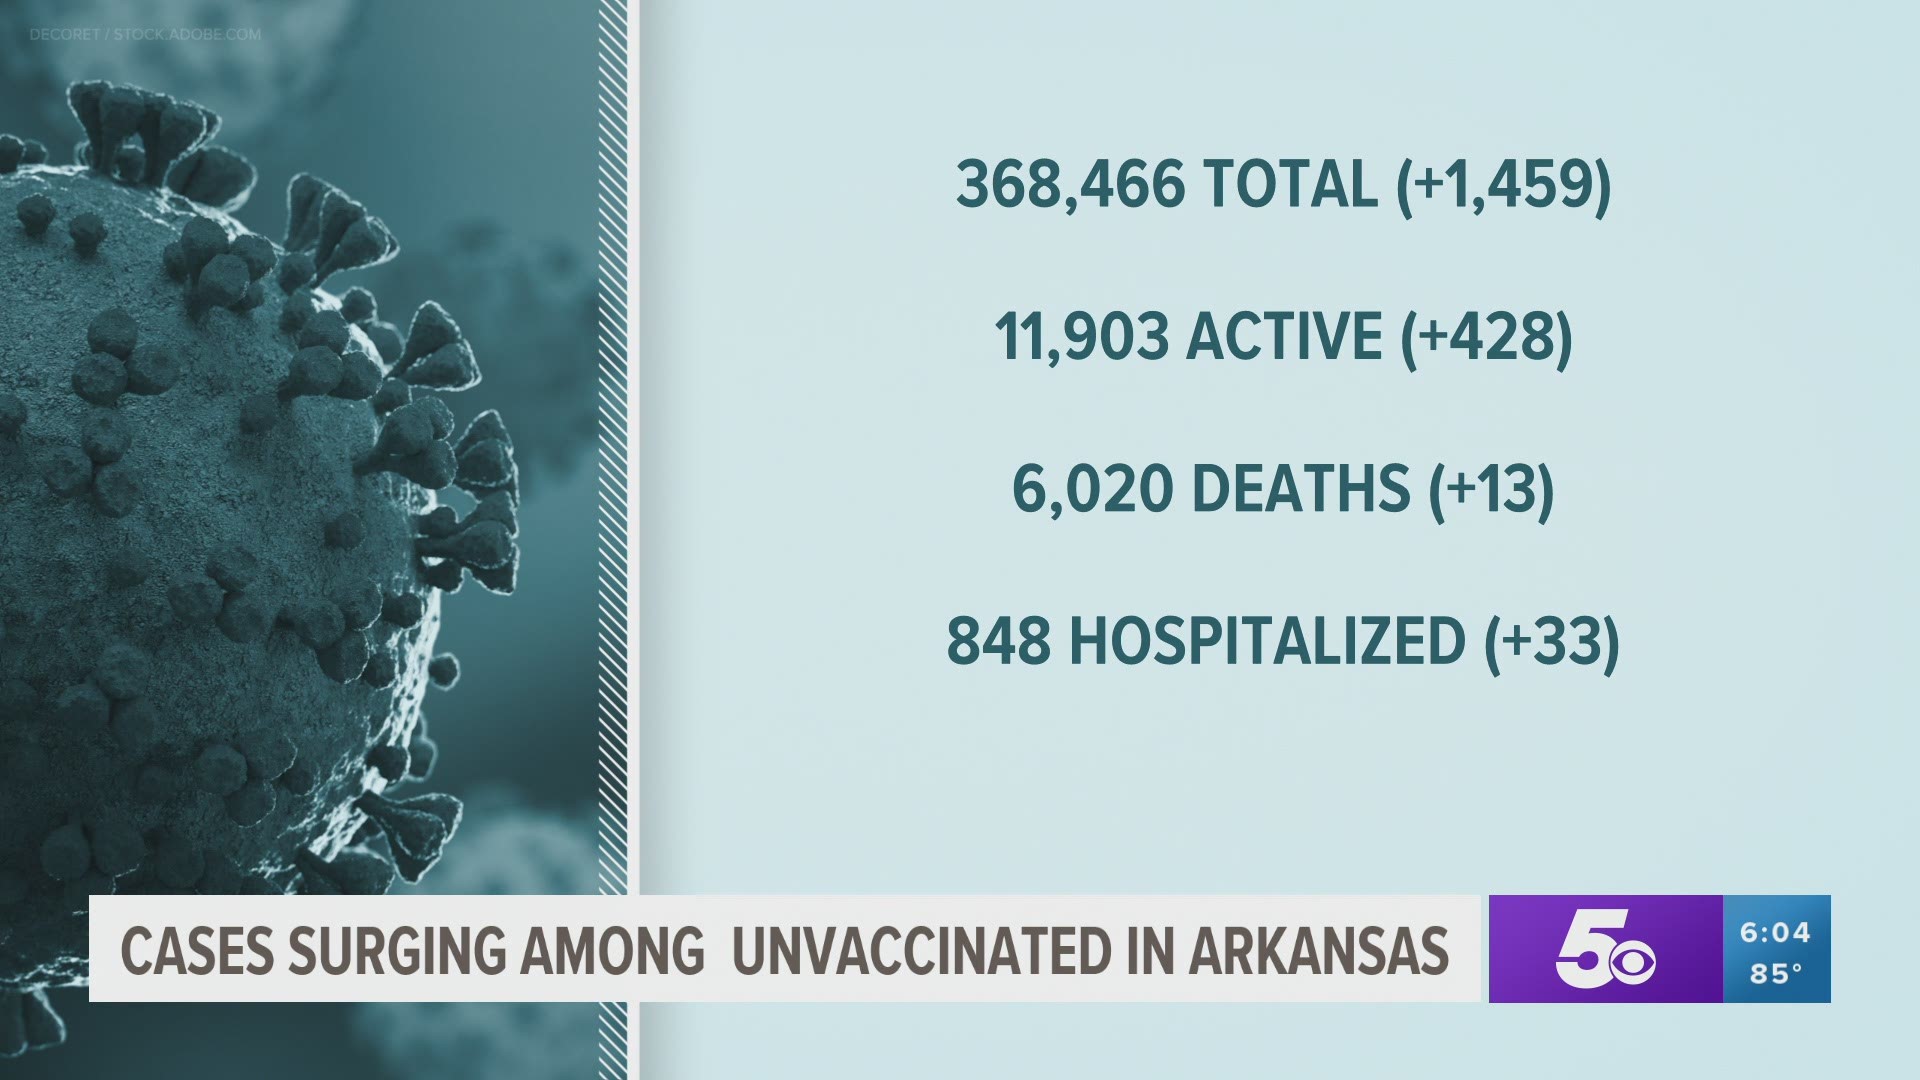 COVID hospitalizations in Arkansas have quadrupled since June.